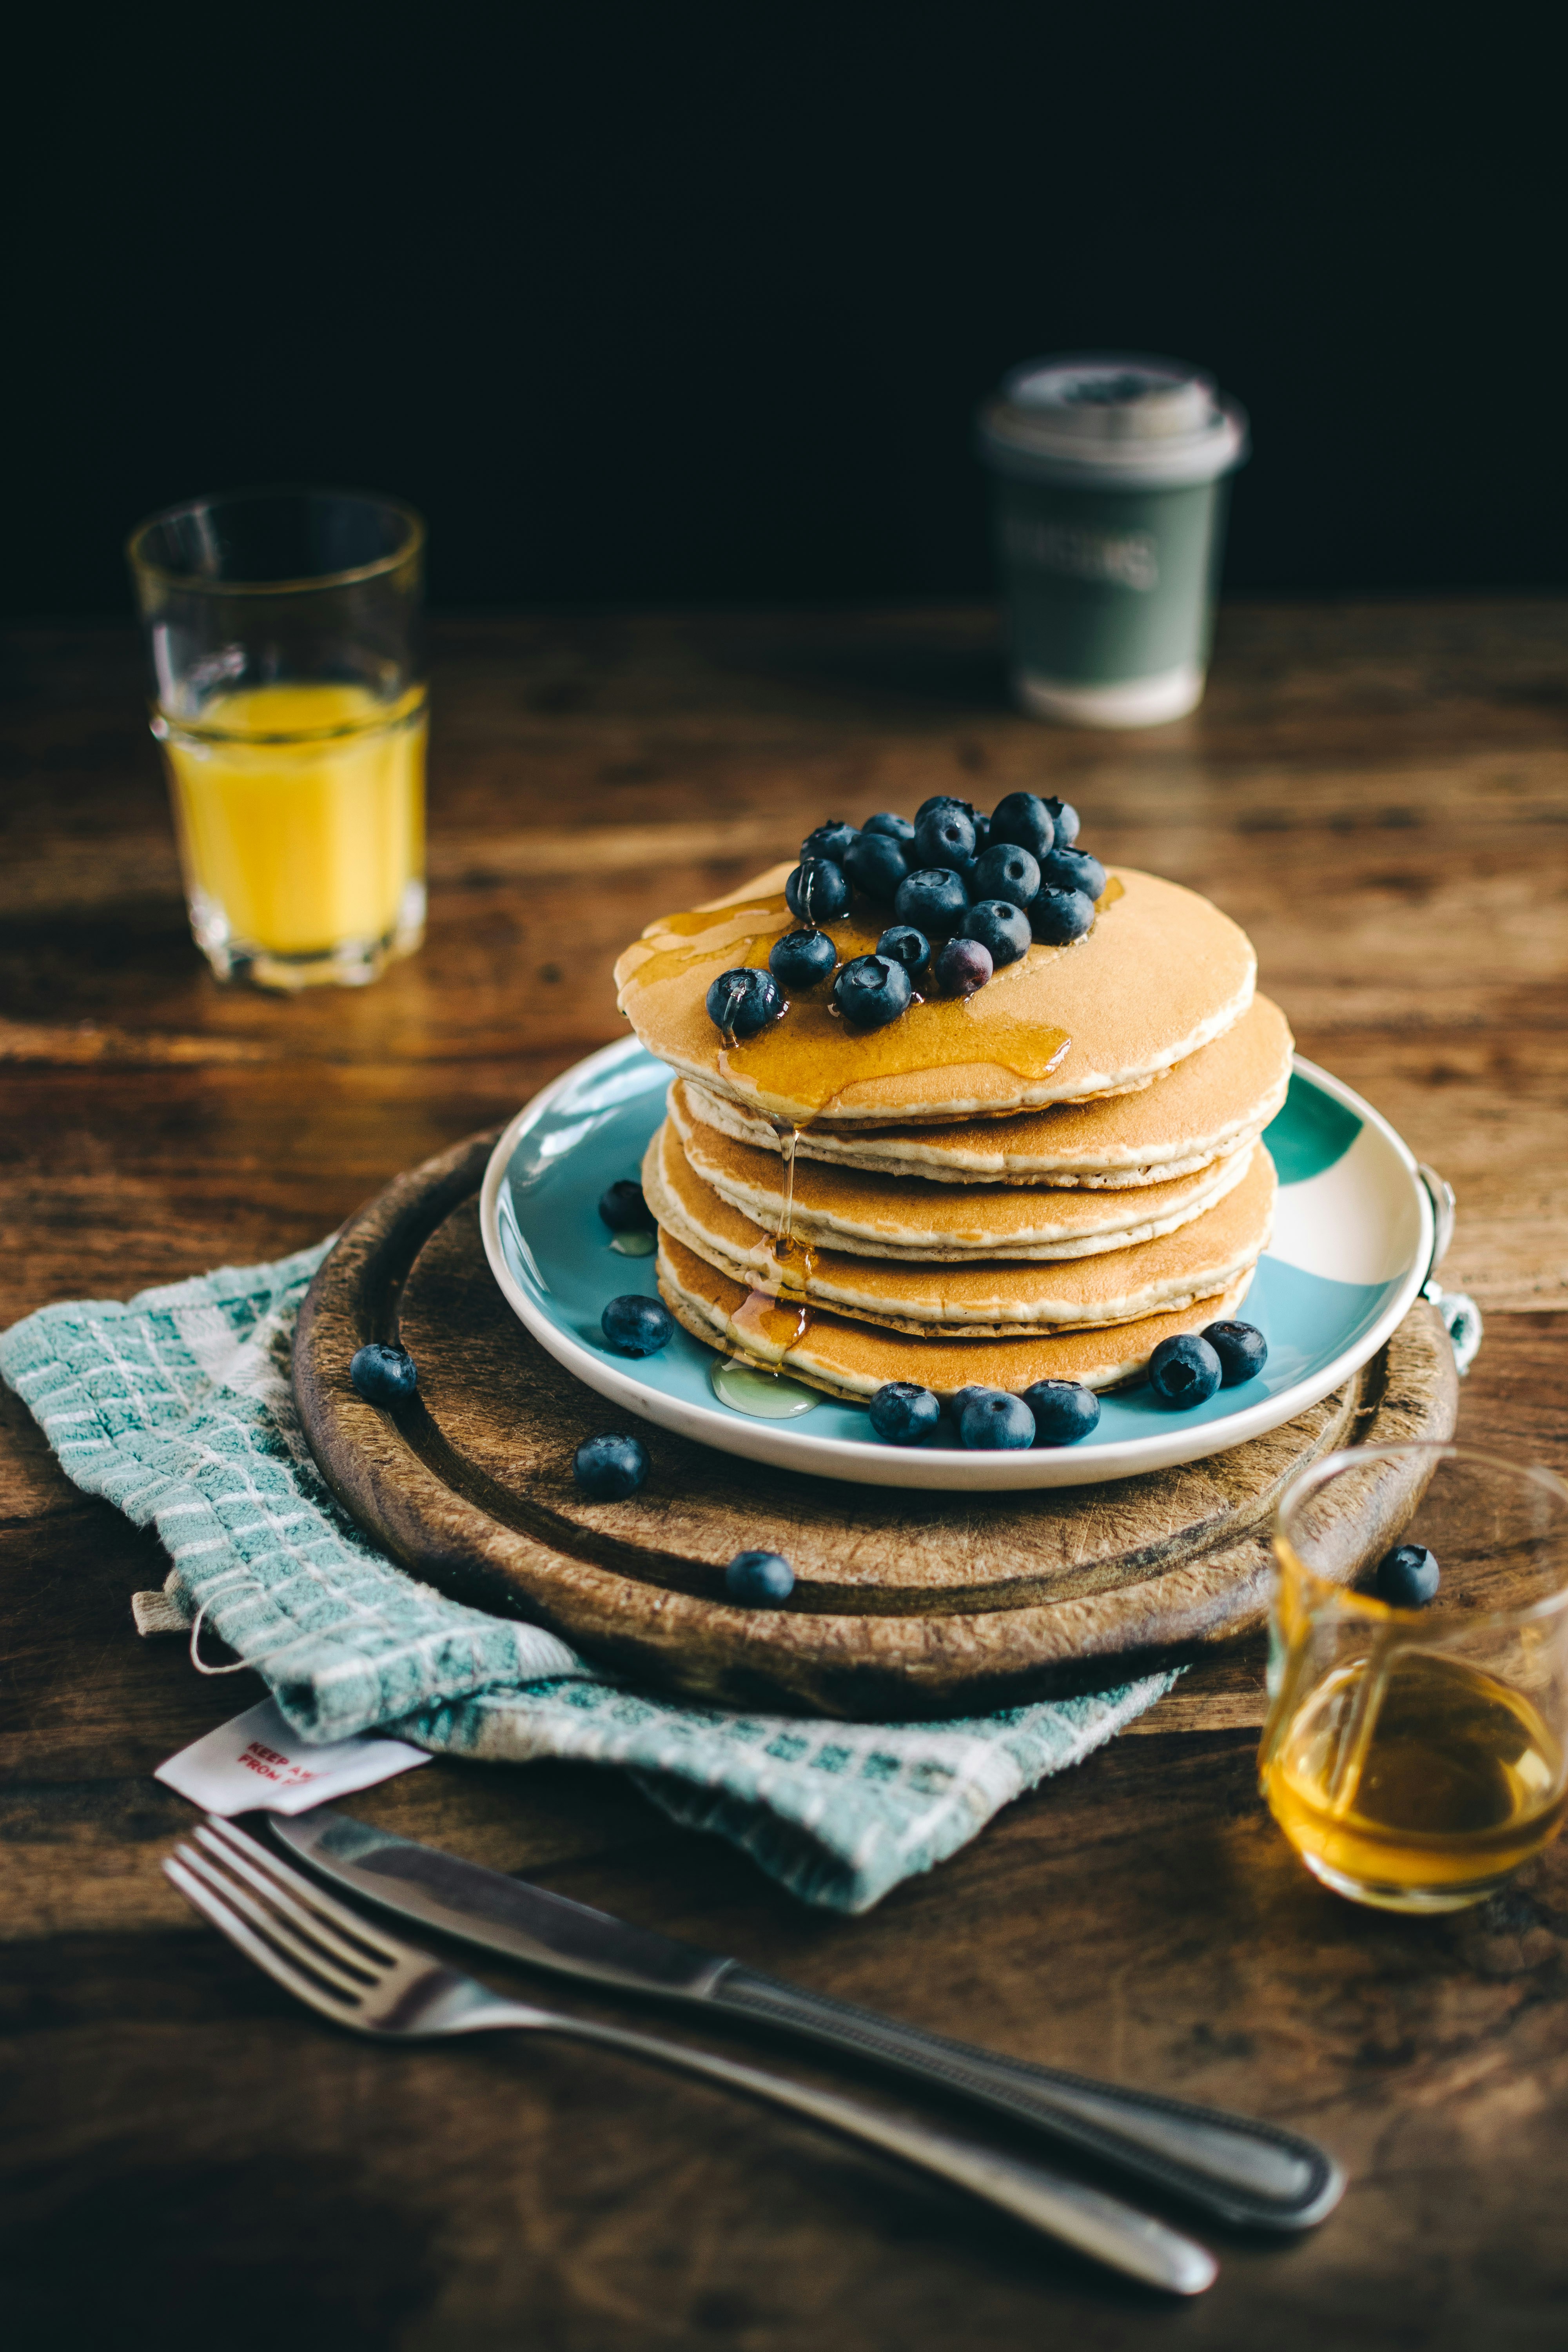 Pancakes and juice | Source: Unsplash